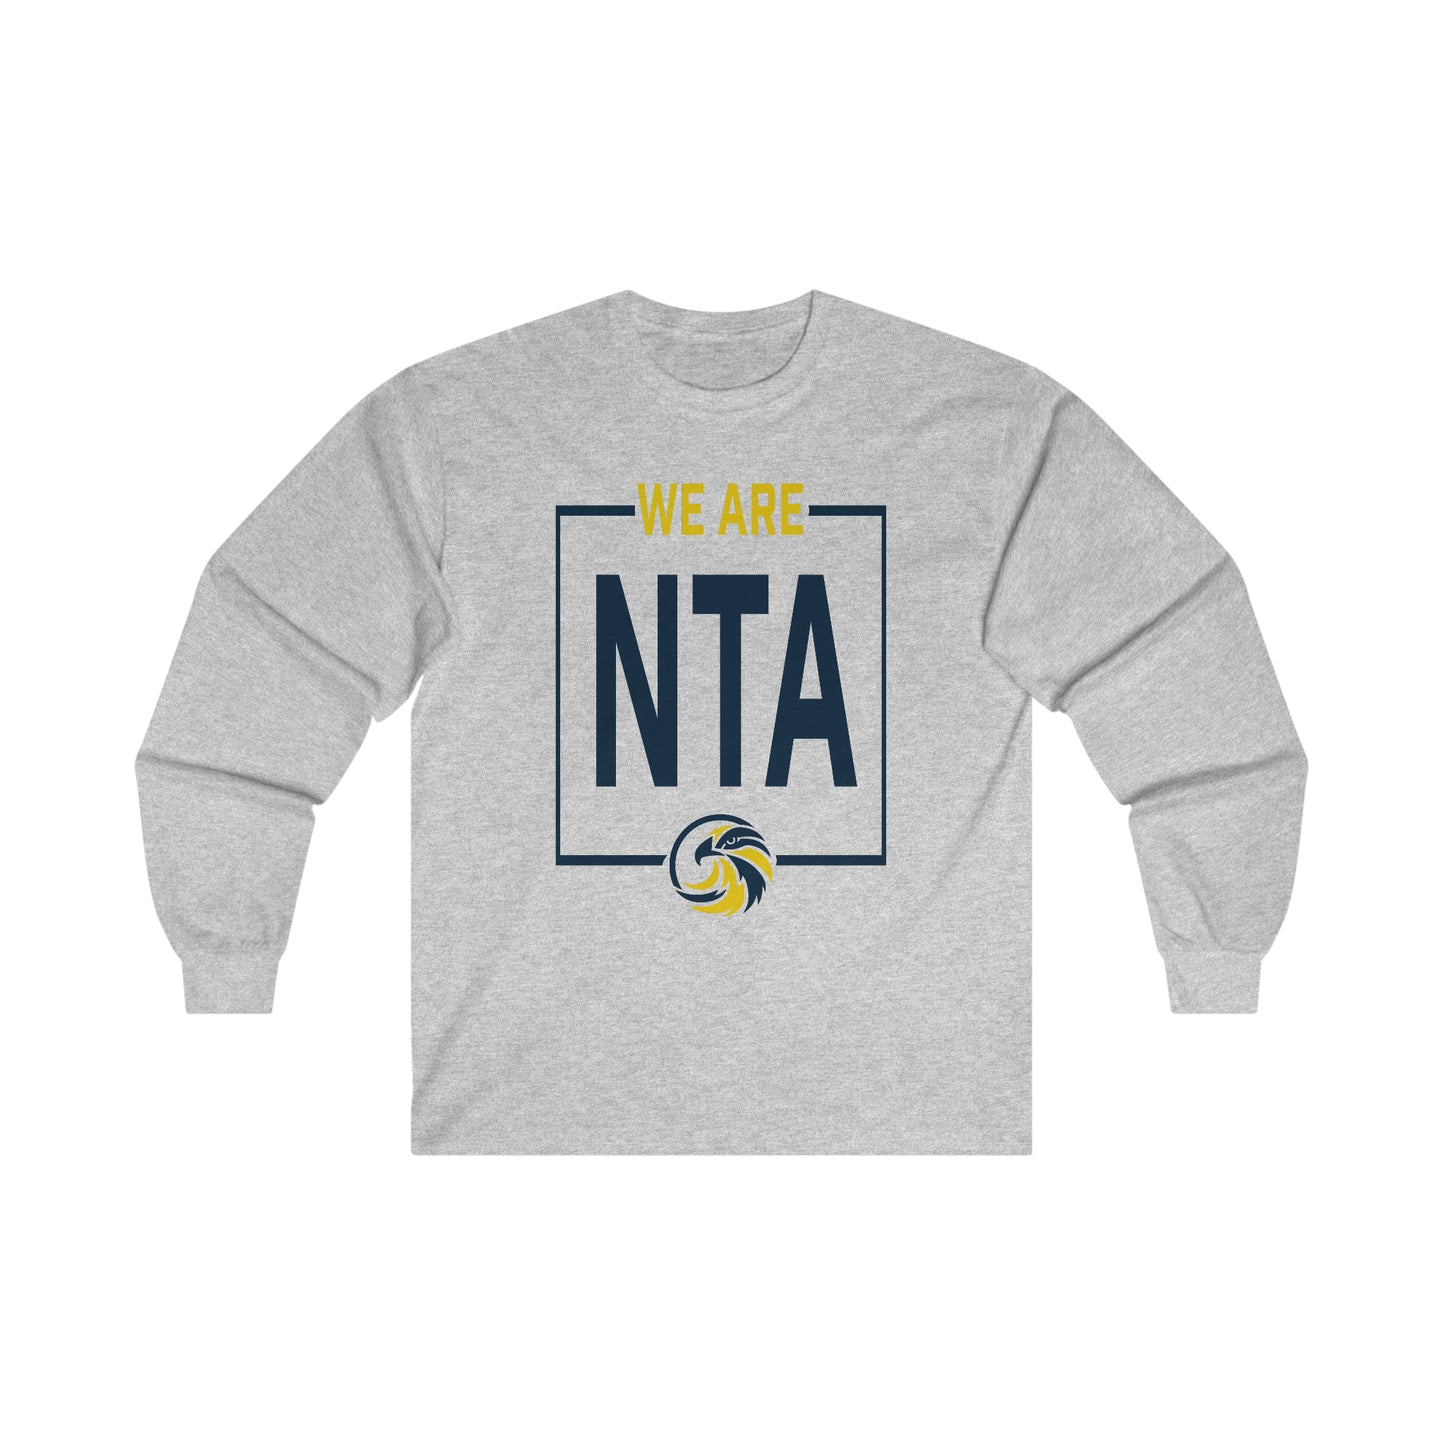 We are NTA - Gildan Ultra Cotton Long Sleeve Tee